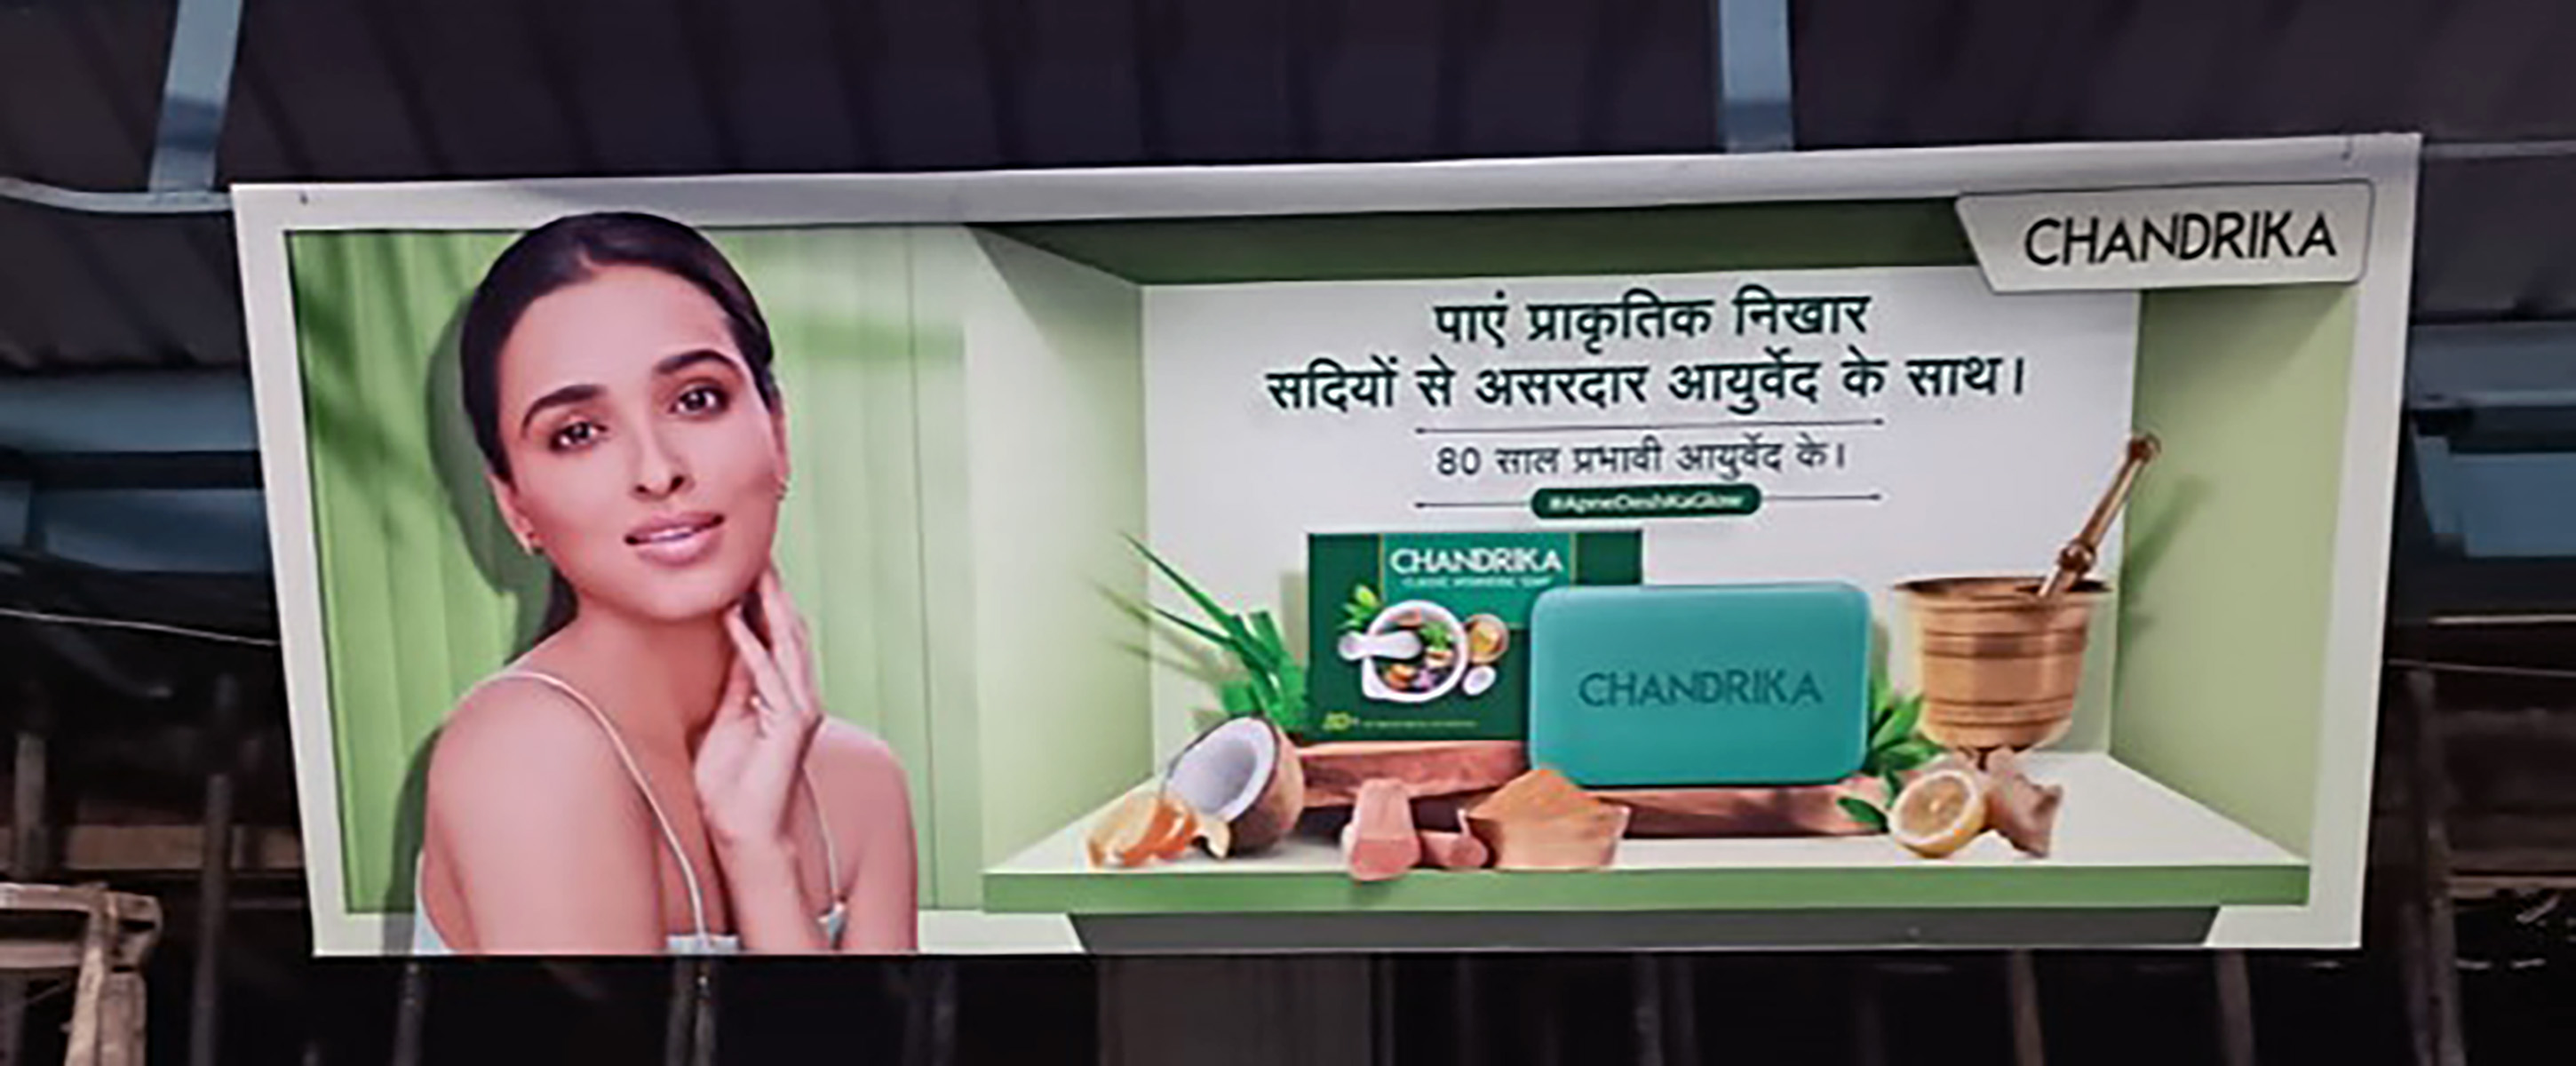 Chandrika campaign OOH